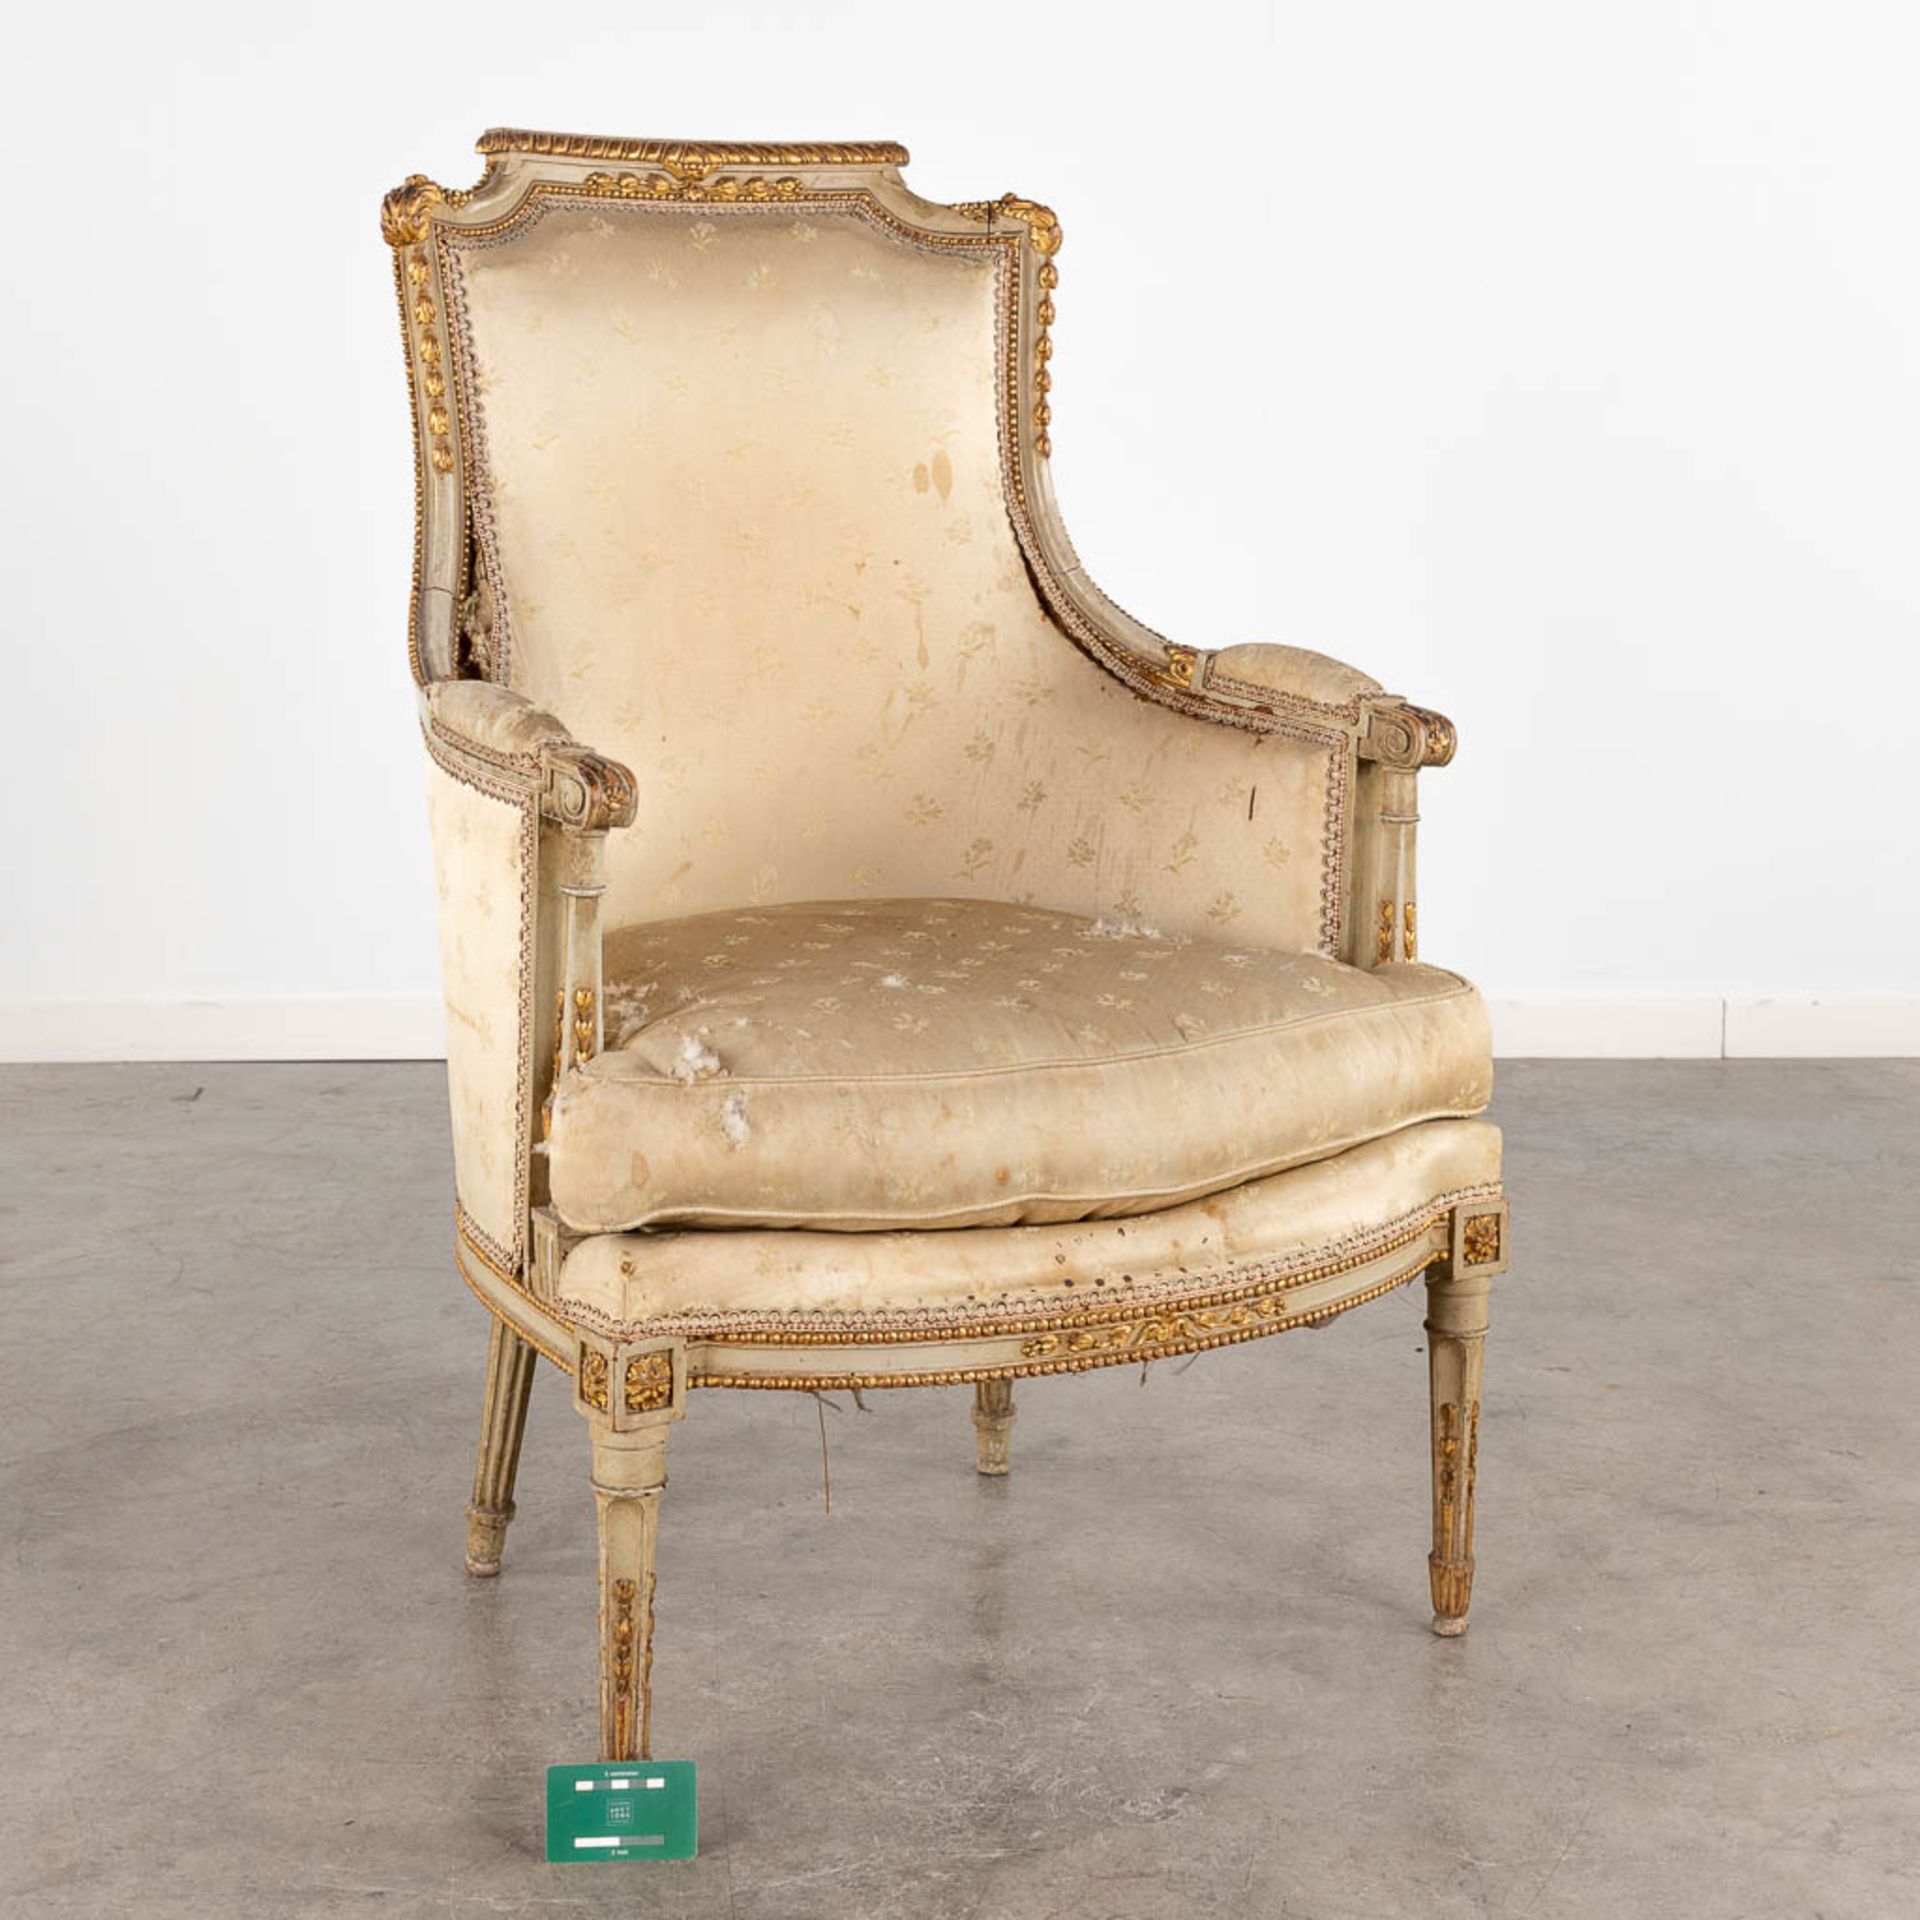 A sculptured armchair, Louis XVI style, 19th C. (D:64 x W:65 x H:100 cm) - Image 2 of 16